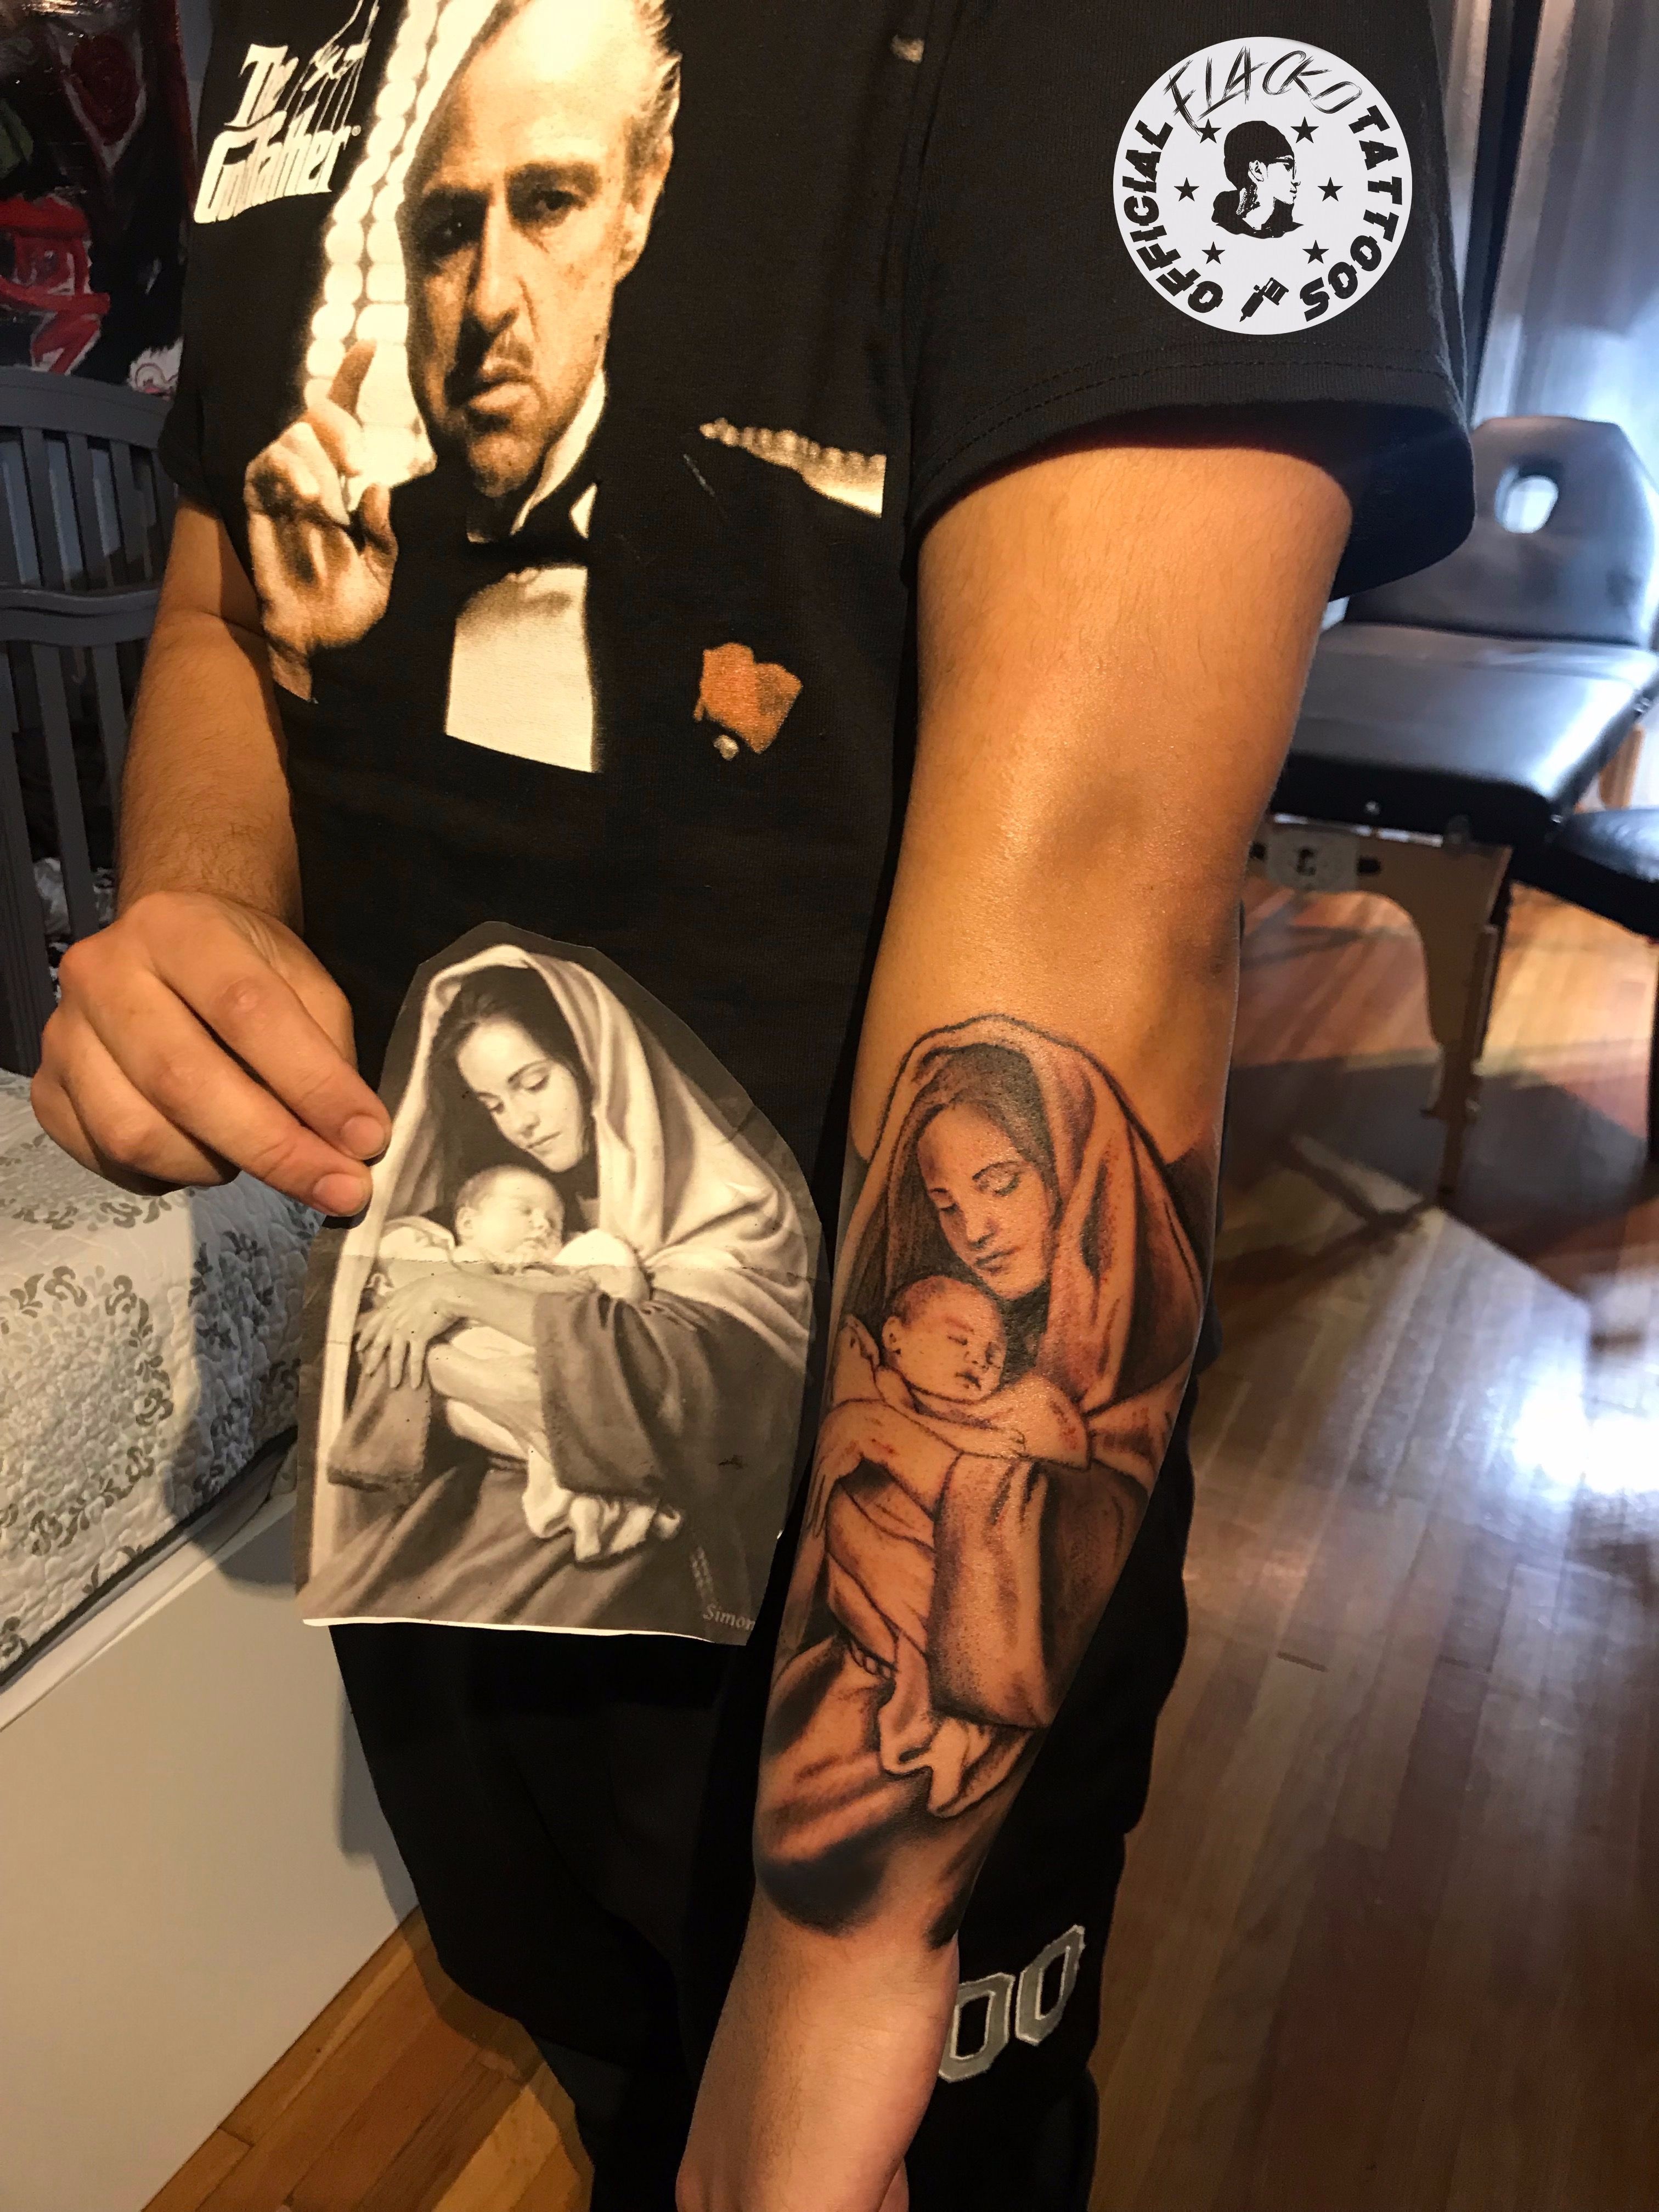 50 Virgin Mary Tattoo Design Ideas  TattooTab